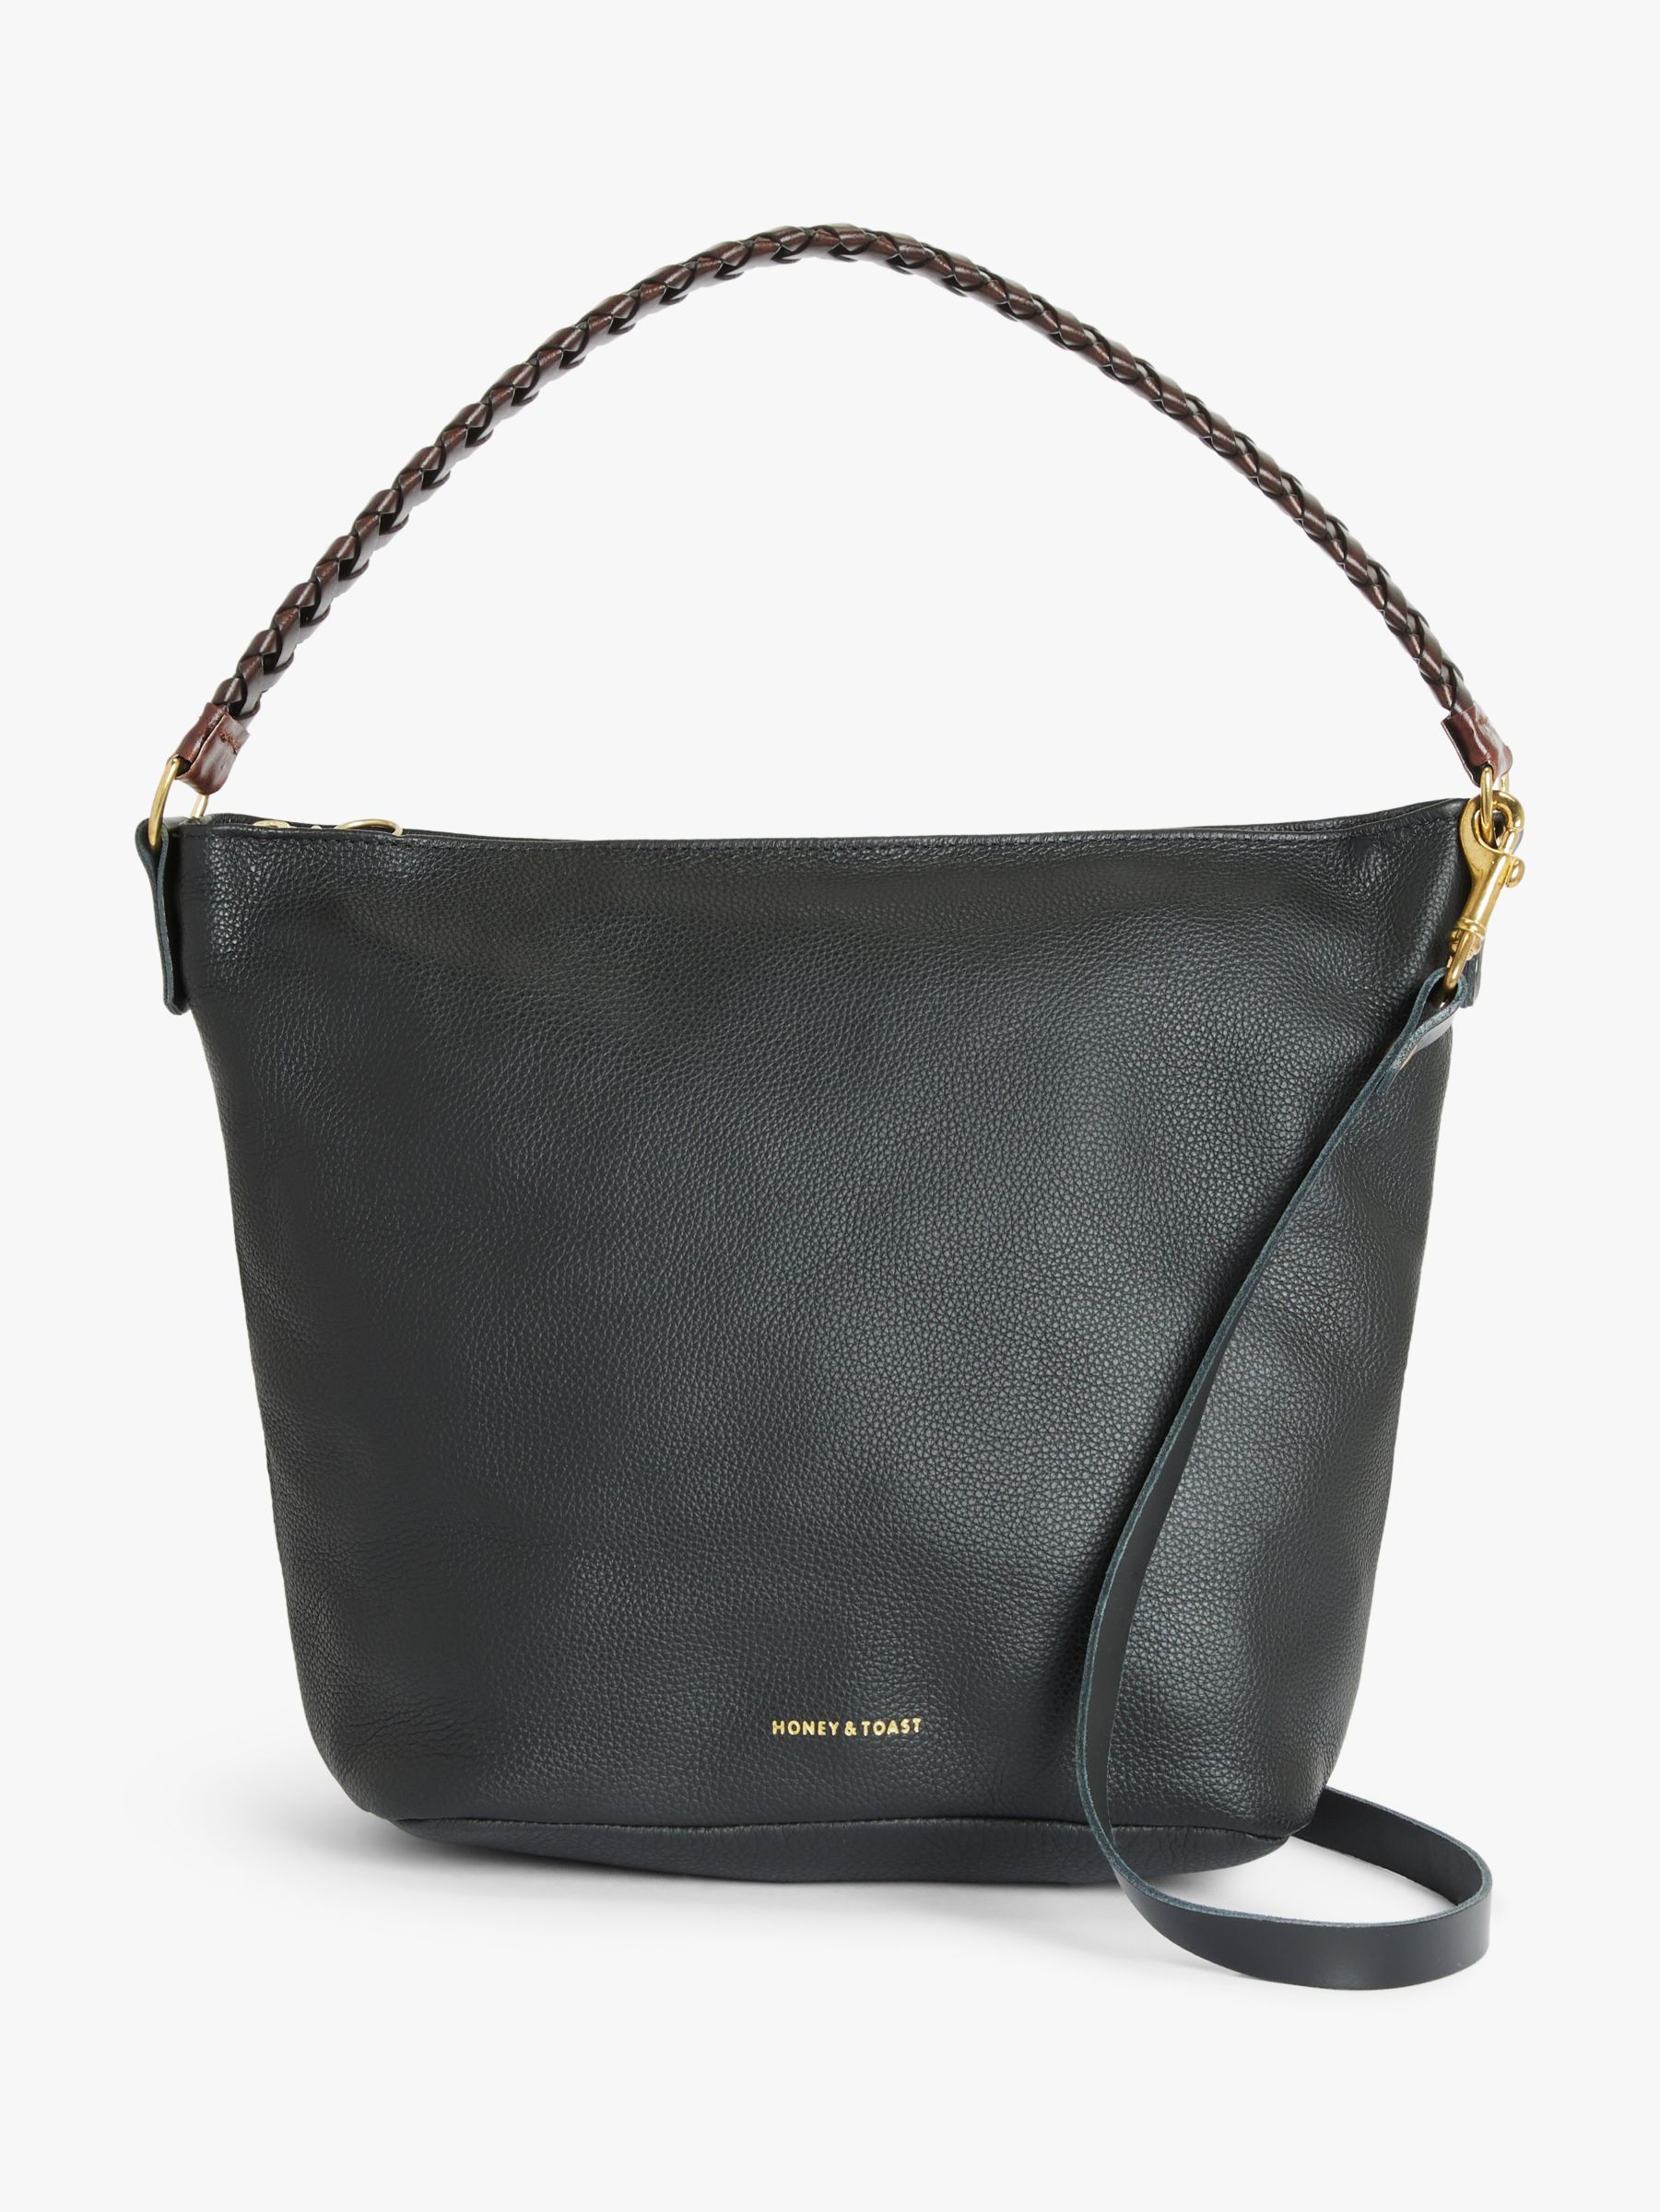 Honey & Toast Libby Leather Hobo Bag, Black at John Lewis & Partners